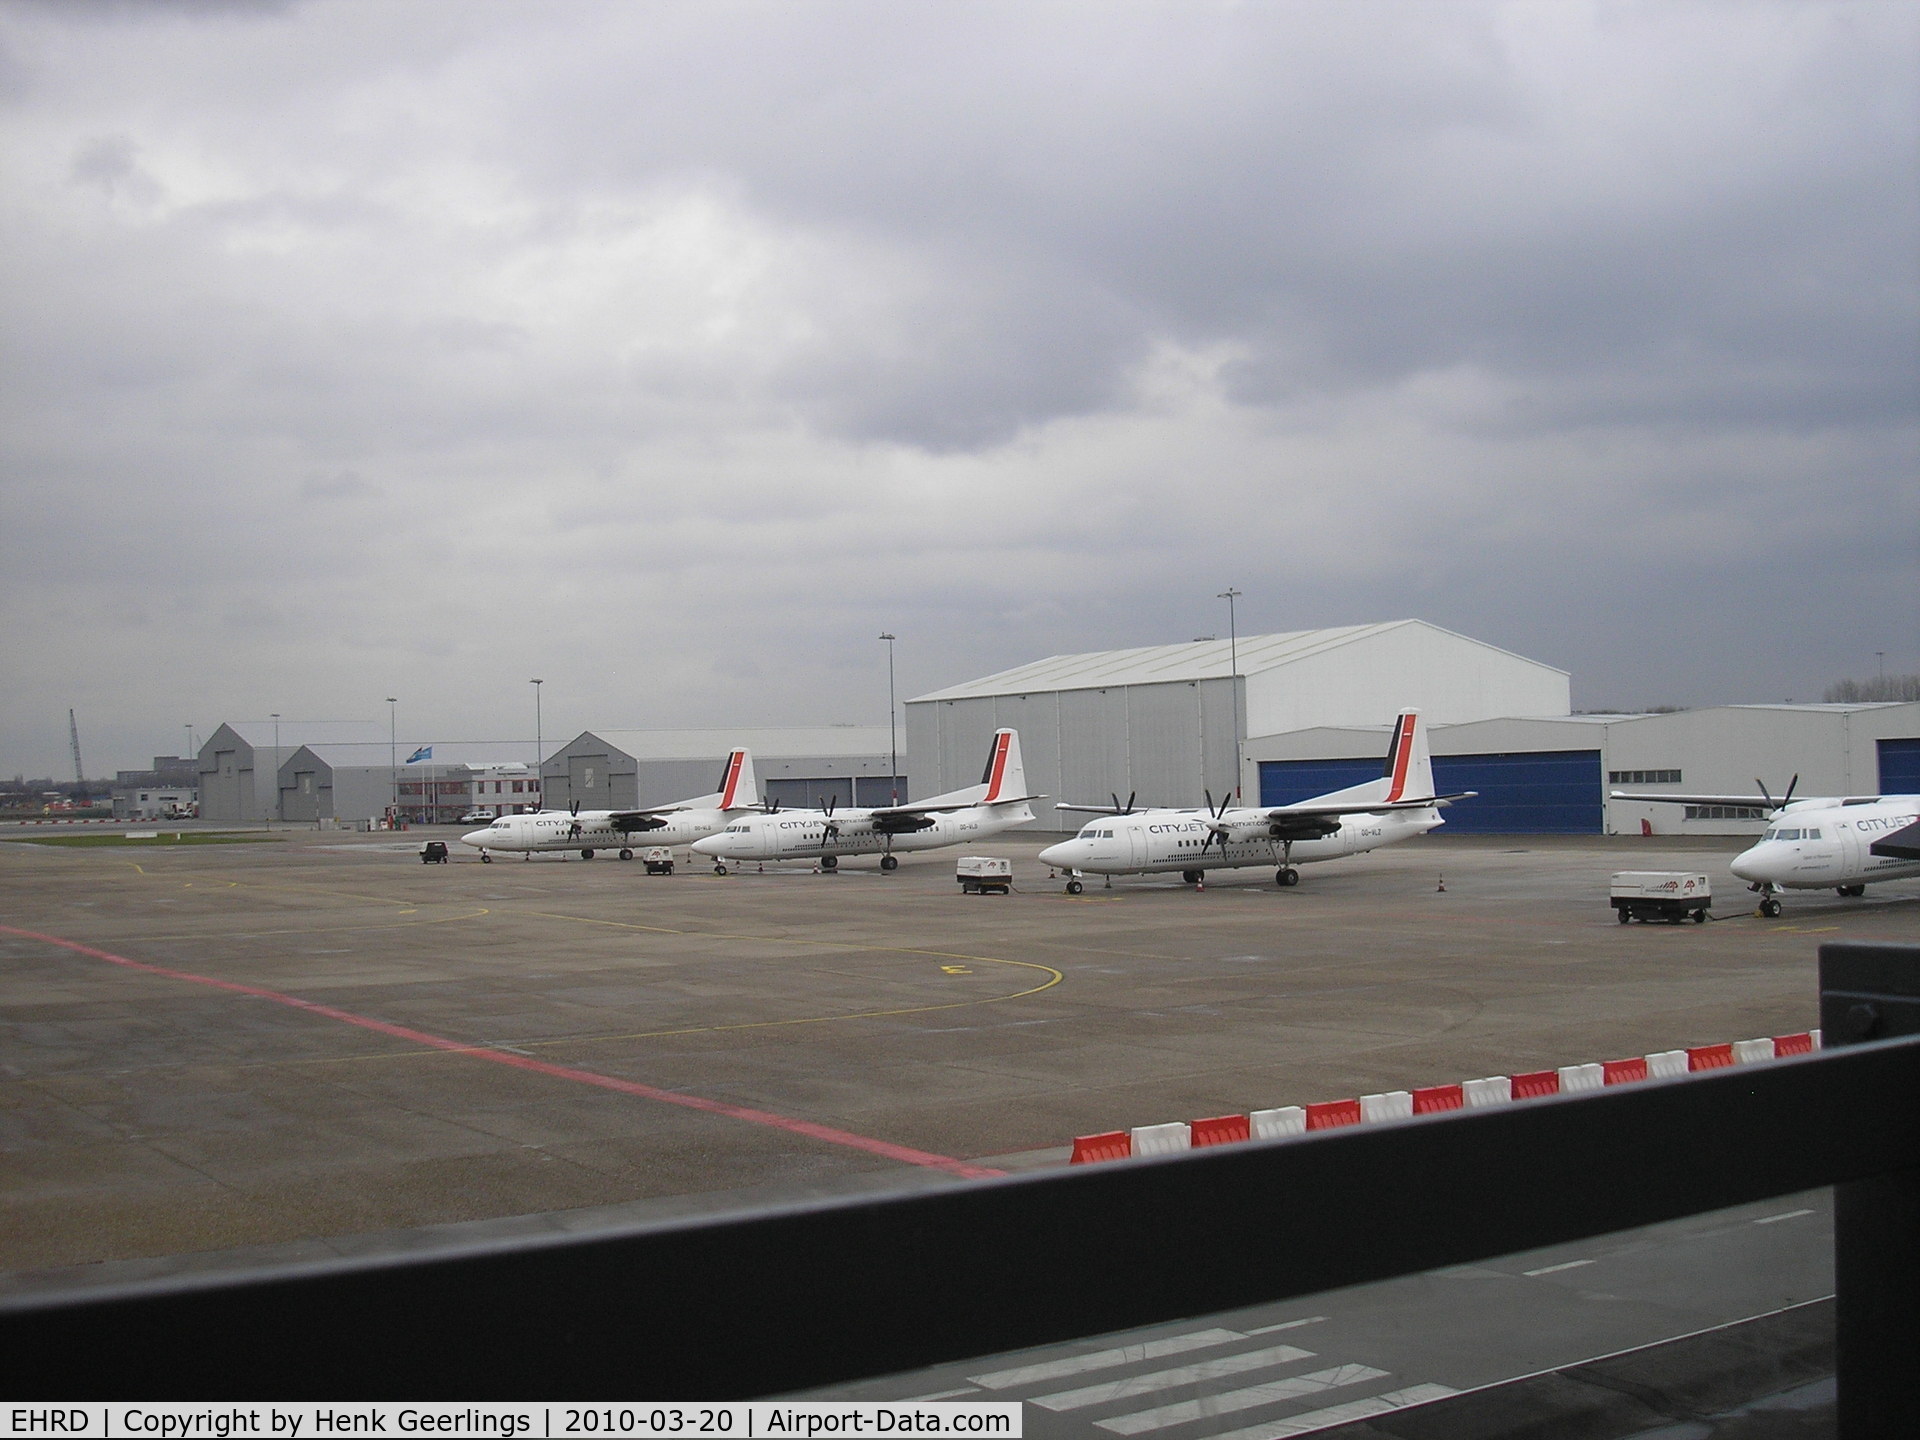 Rotterdam Airport, Rotterdam Netherlands (EHRD) - CityJet Fokker 50 fleet